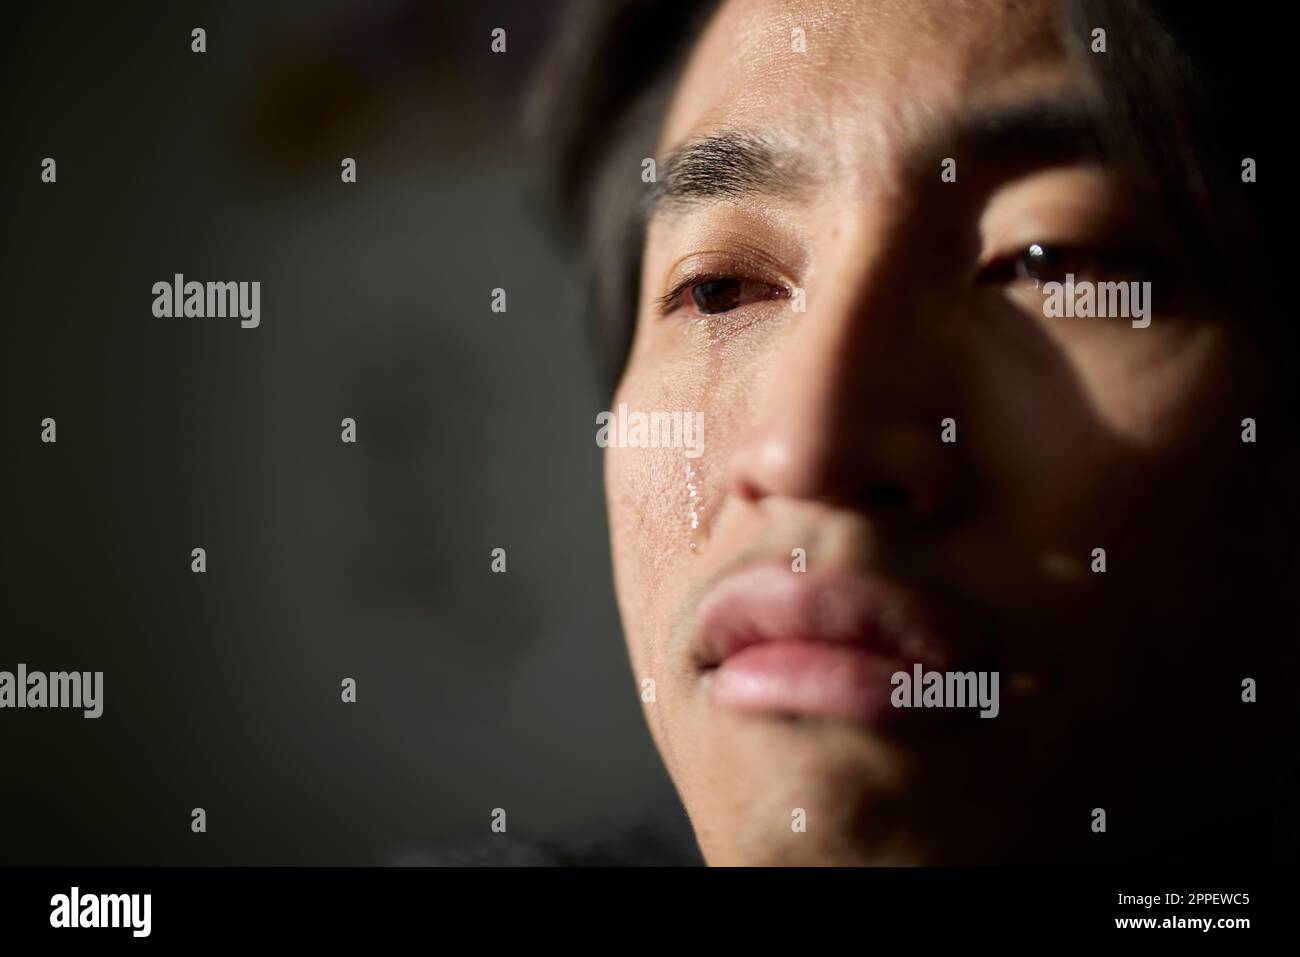 Portrait of crying man Stock Photo - Alamy